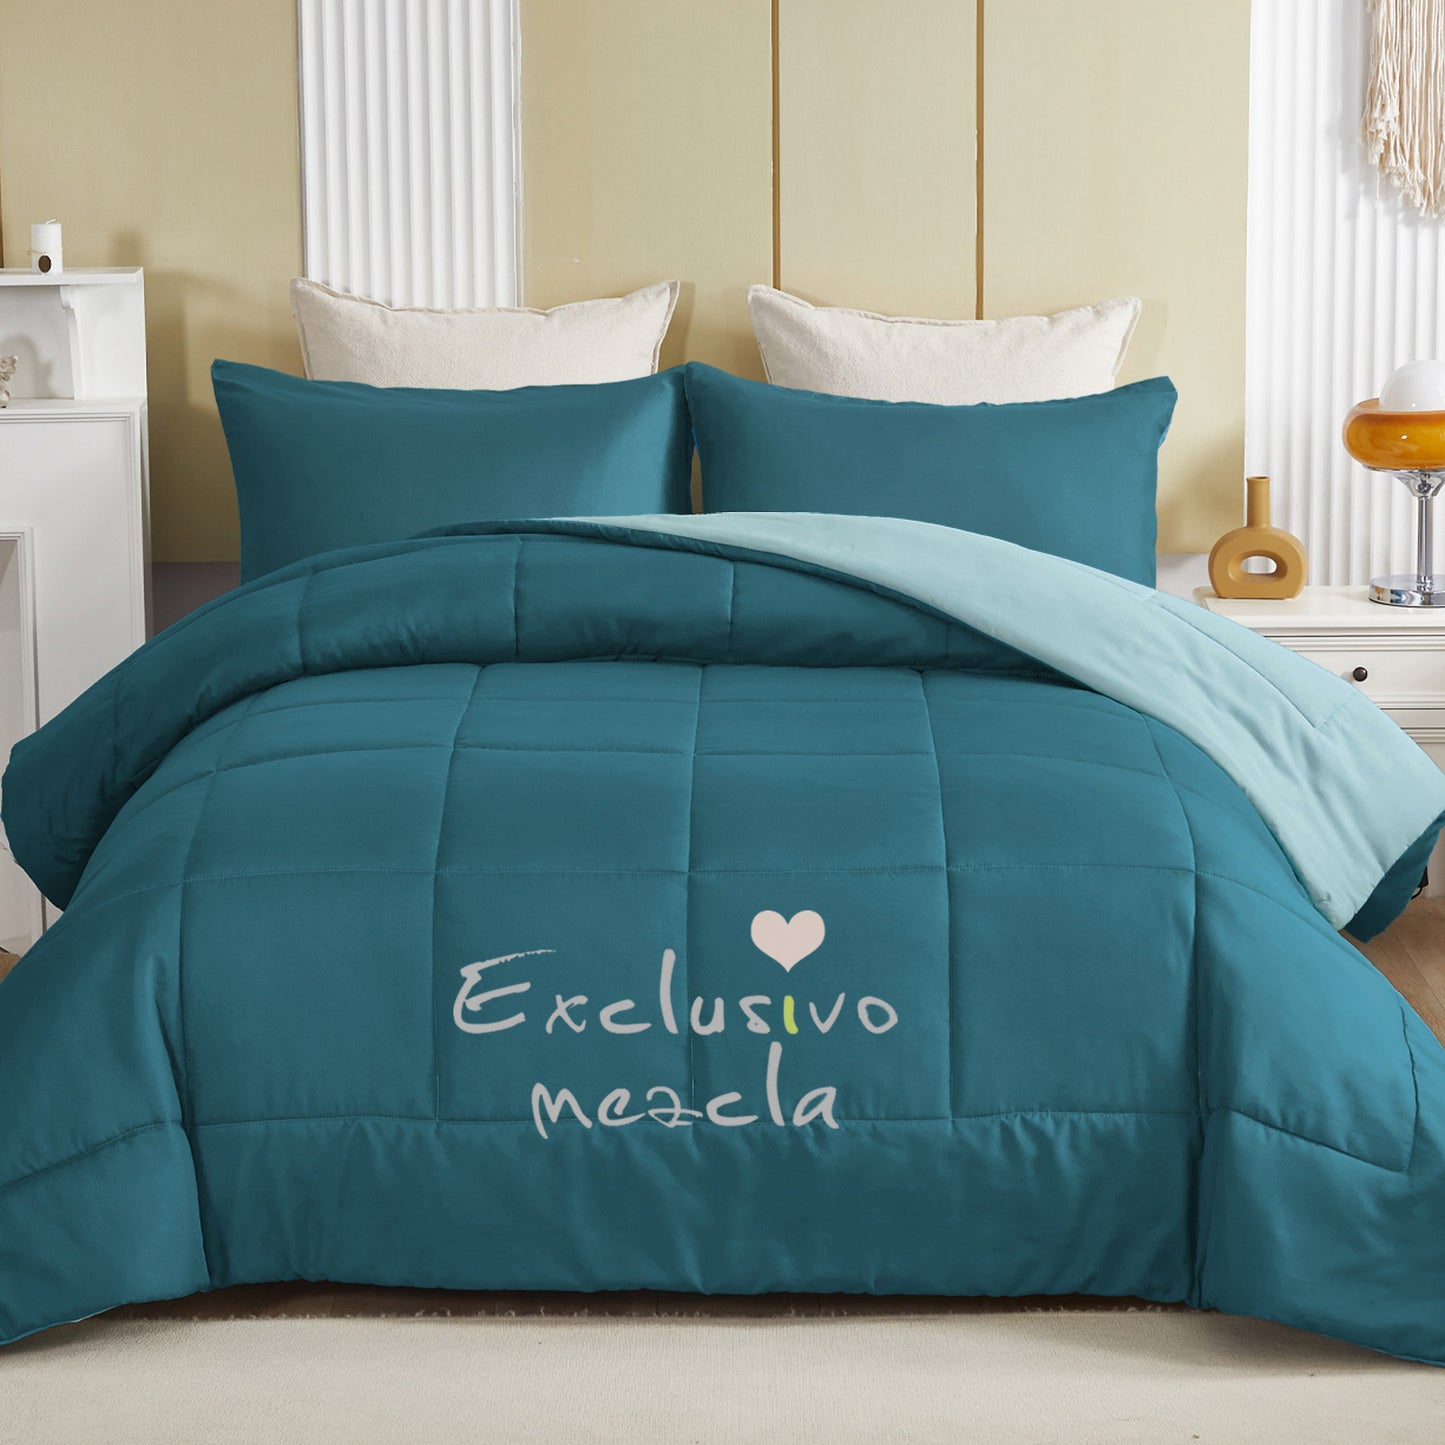 Exclusivo Mezcla Lightweight Reversible 3-Piece Comforter Set All Seasons, Down Alternative Comforter with 2 Pillow Shams, Queen Size, Dusty Teal/ Spa Blue